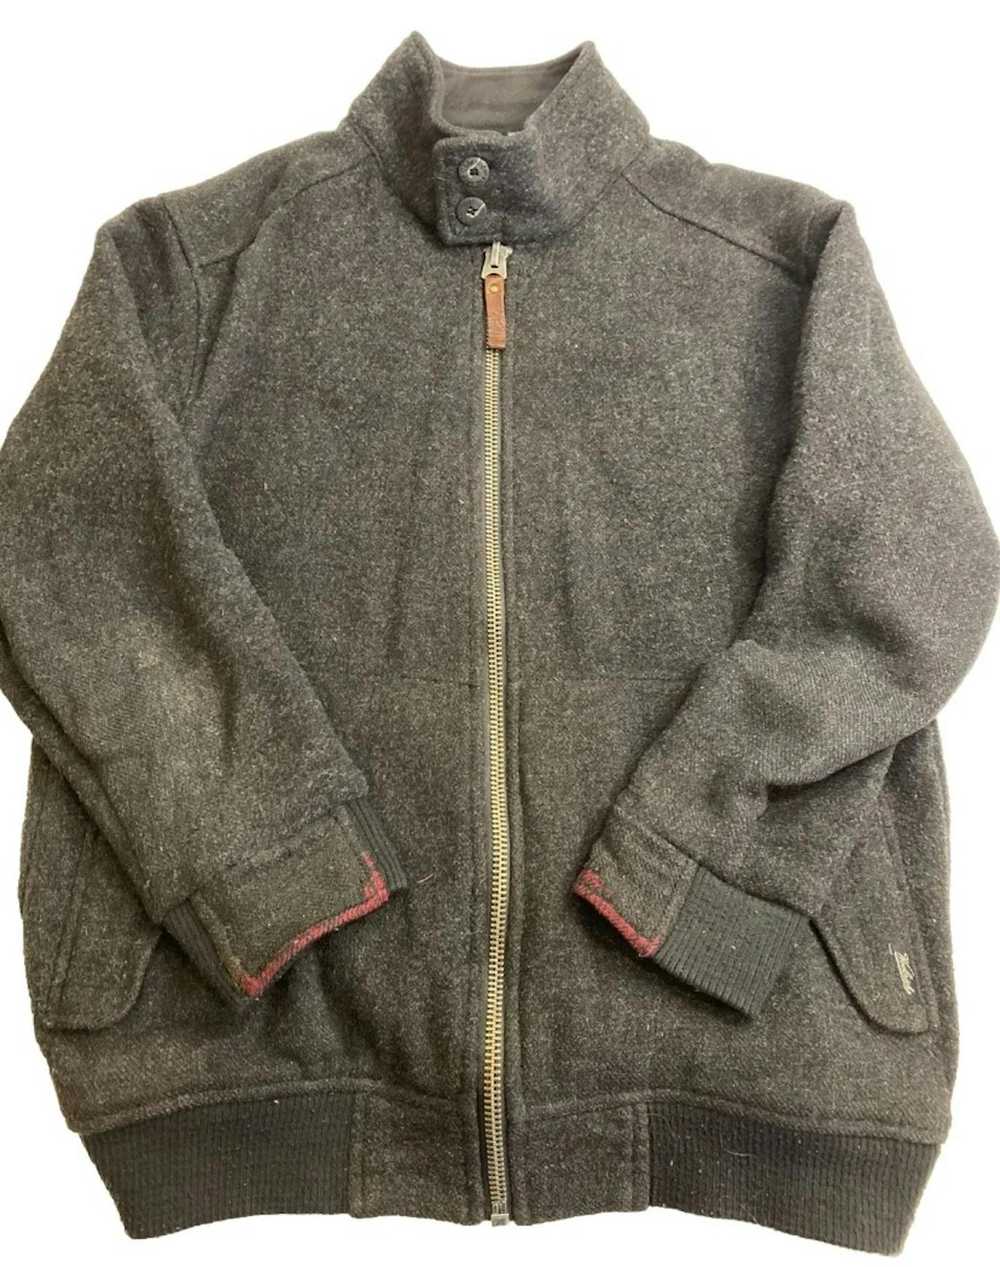 Woolrich Woolen Mills Woolrich Coat Jacket Mens M… - image 3